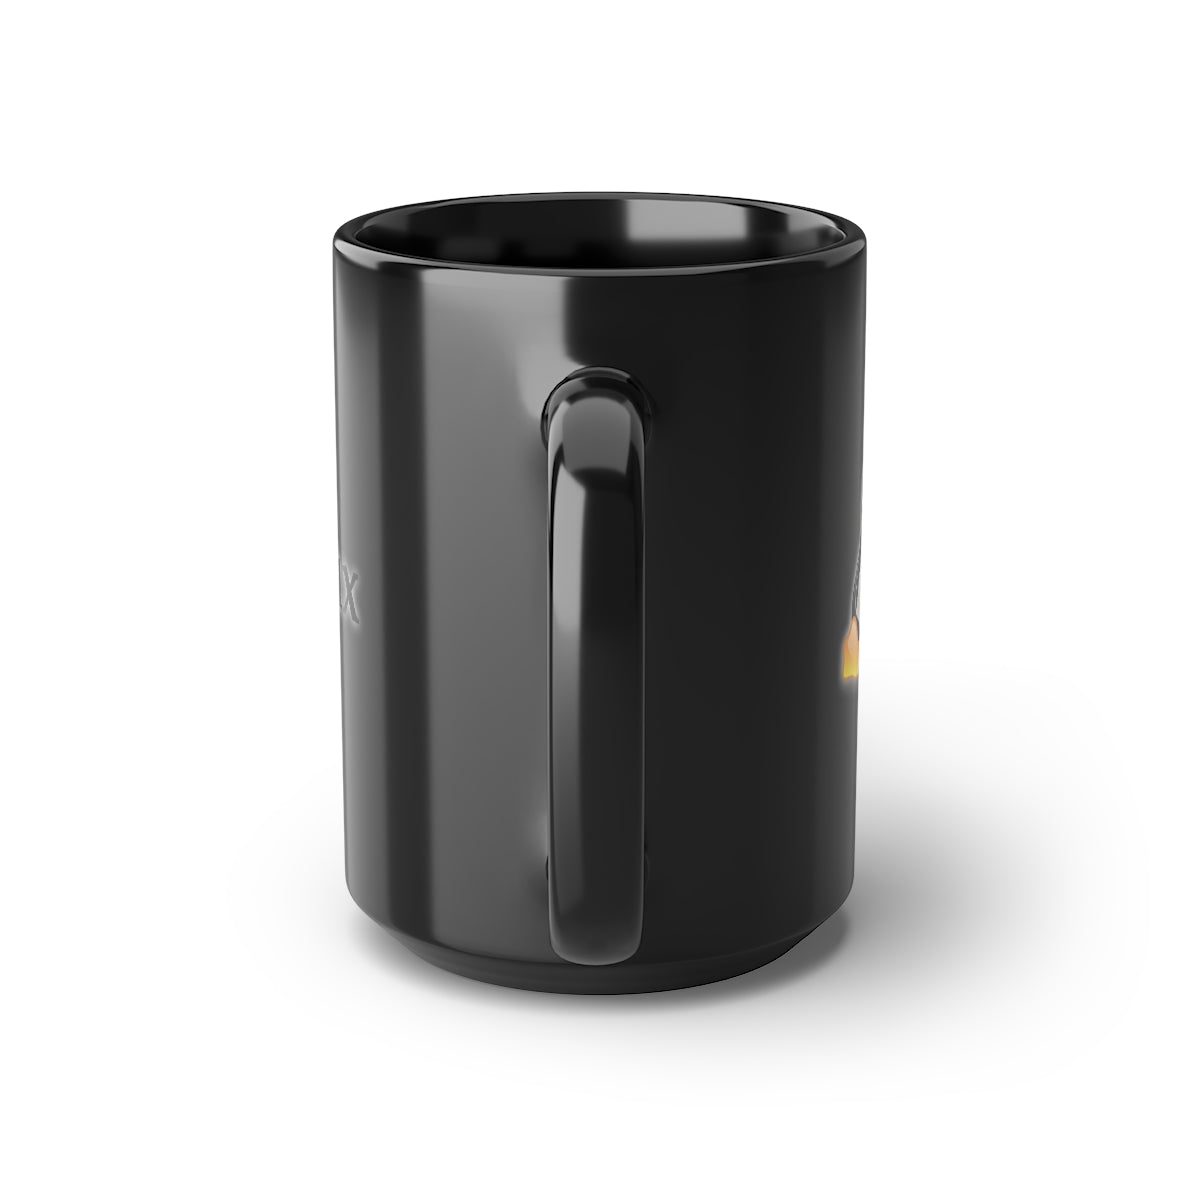 Linux - Black Mug, 15oz